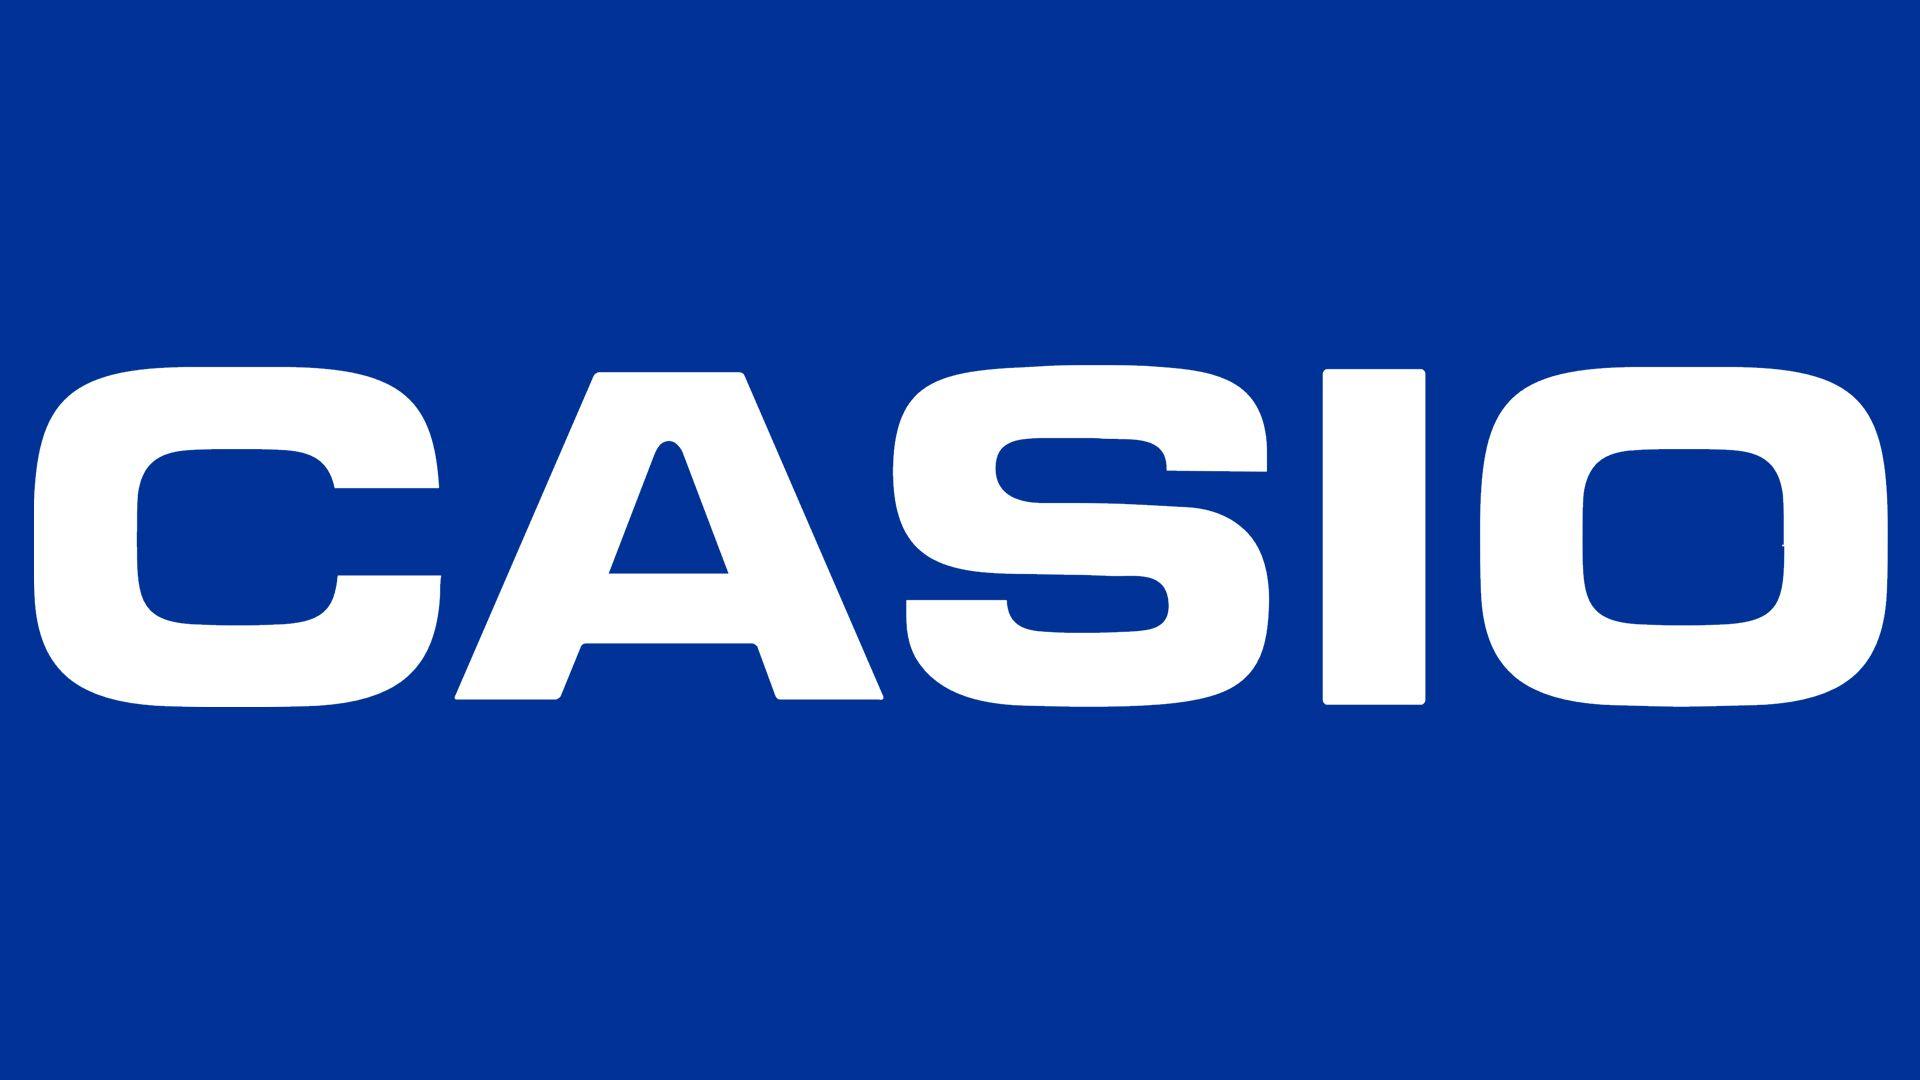 Casio Logo - Casio Logo, Casio Symbol, Meaning, History and Evolution